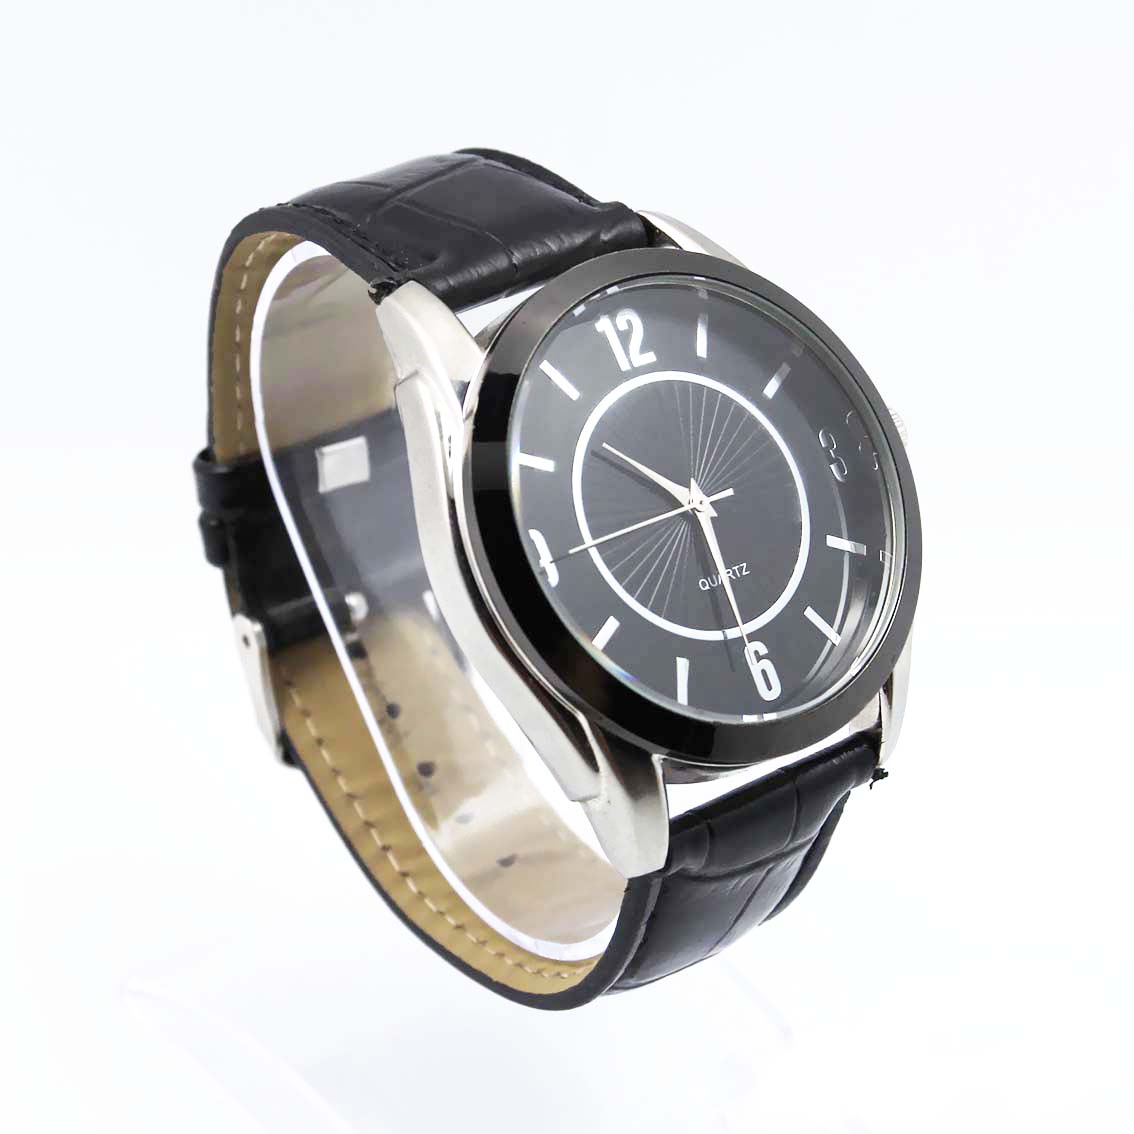 #02100Men's wristwatch quartz analog leather strap watch